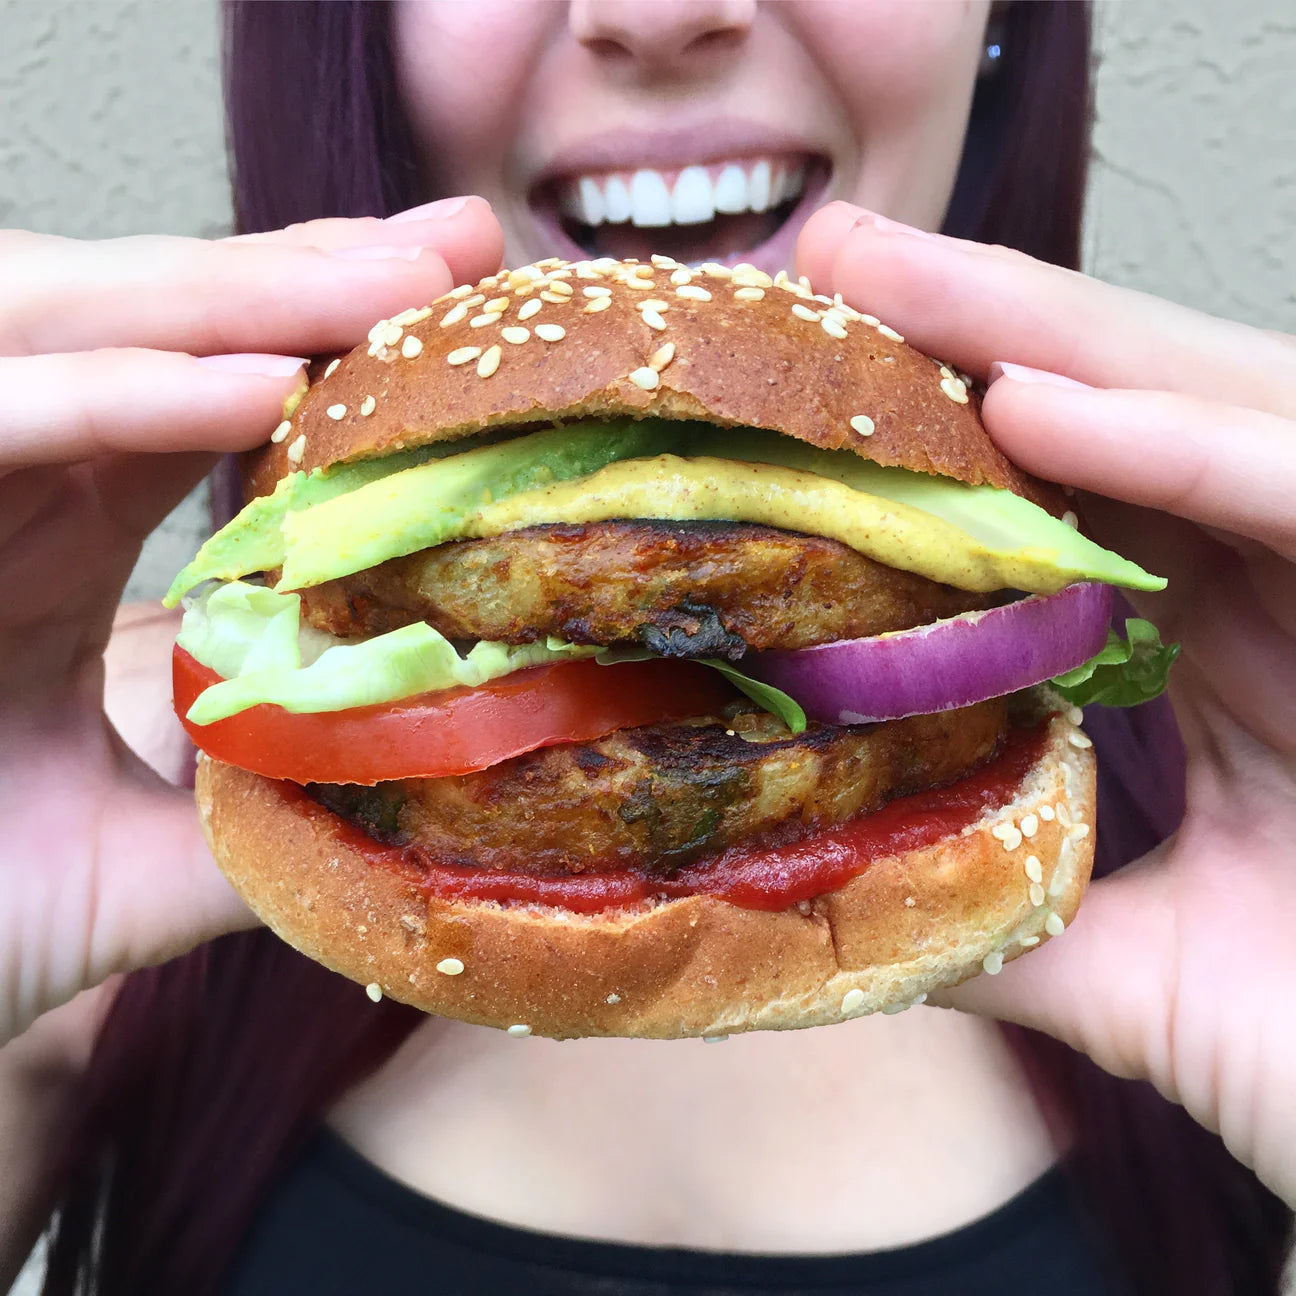 Are Vegan Fast Food Burgers Healthy?